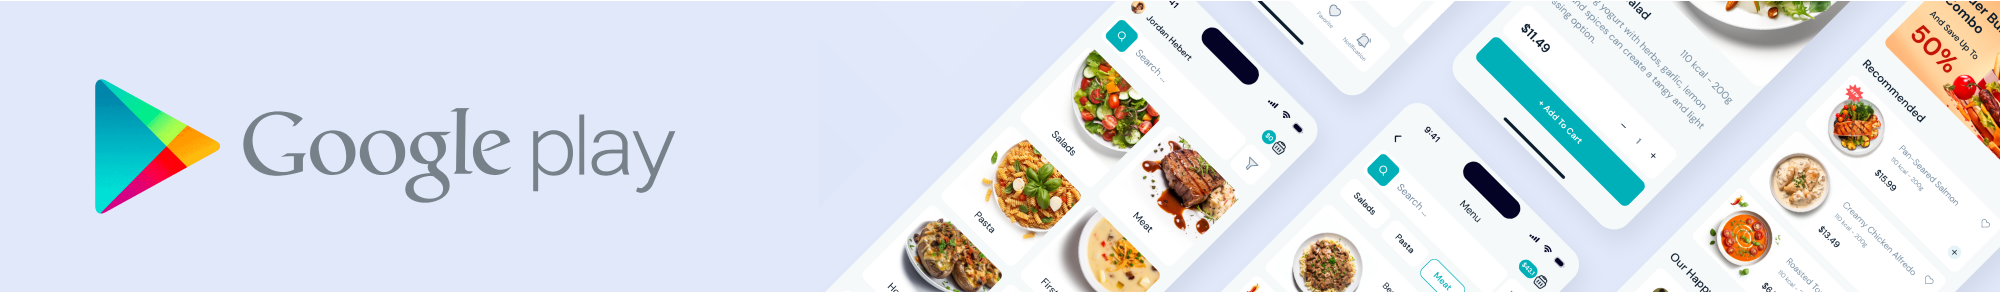 DineHub - Restaurant Food Delivery App | CLI 0.72.4 | TypeScript | Redux Store - 1